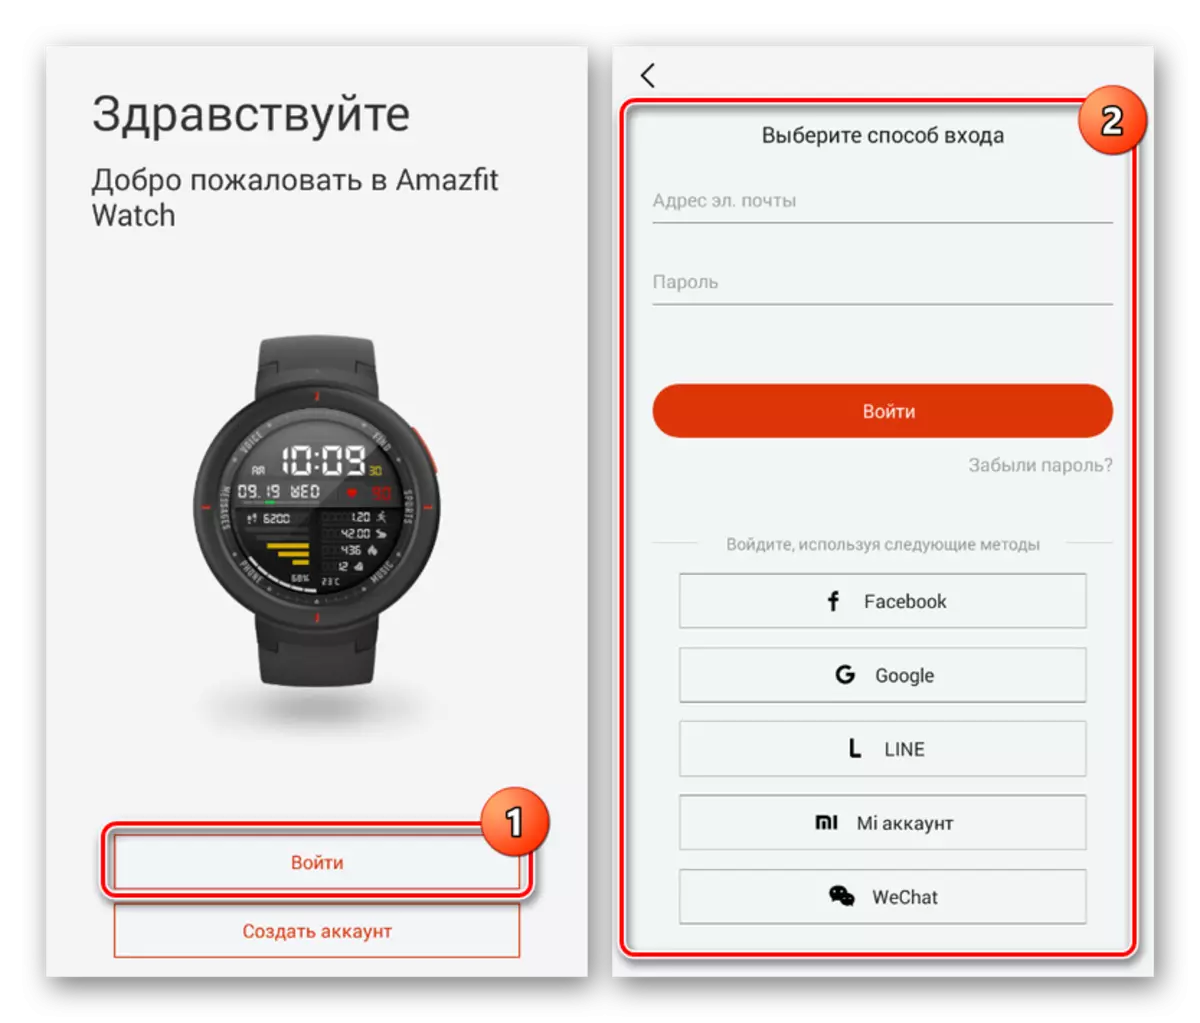 Authorization sa Amazfit Watch application sa Android